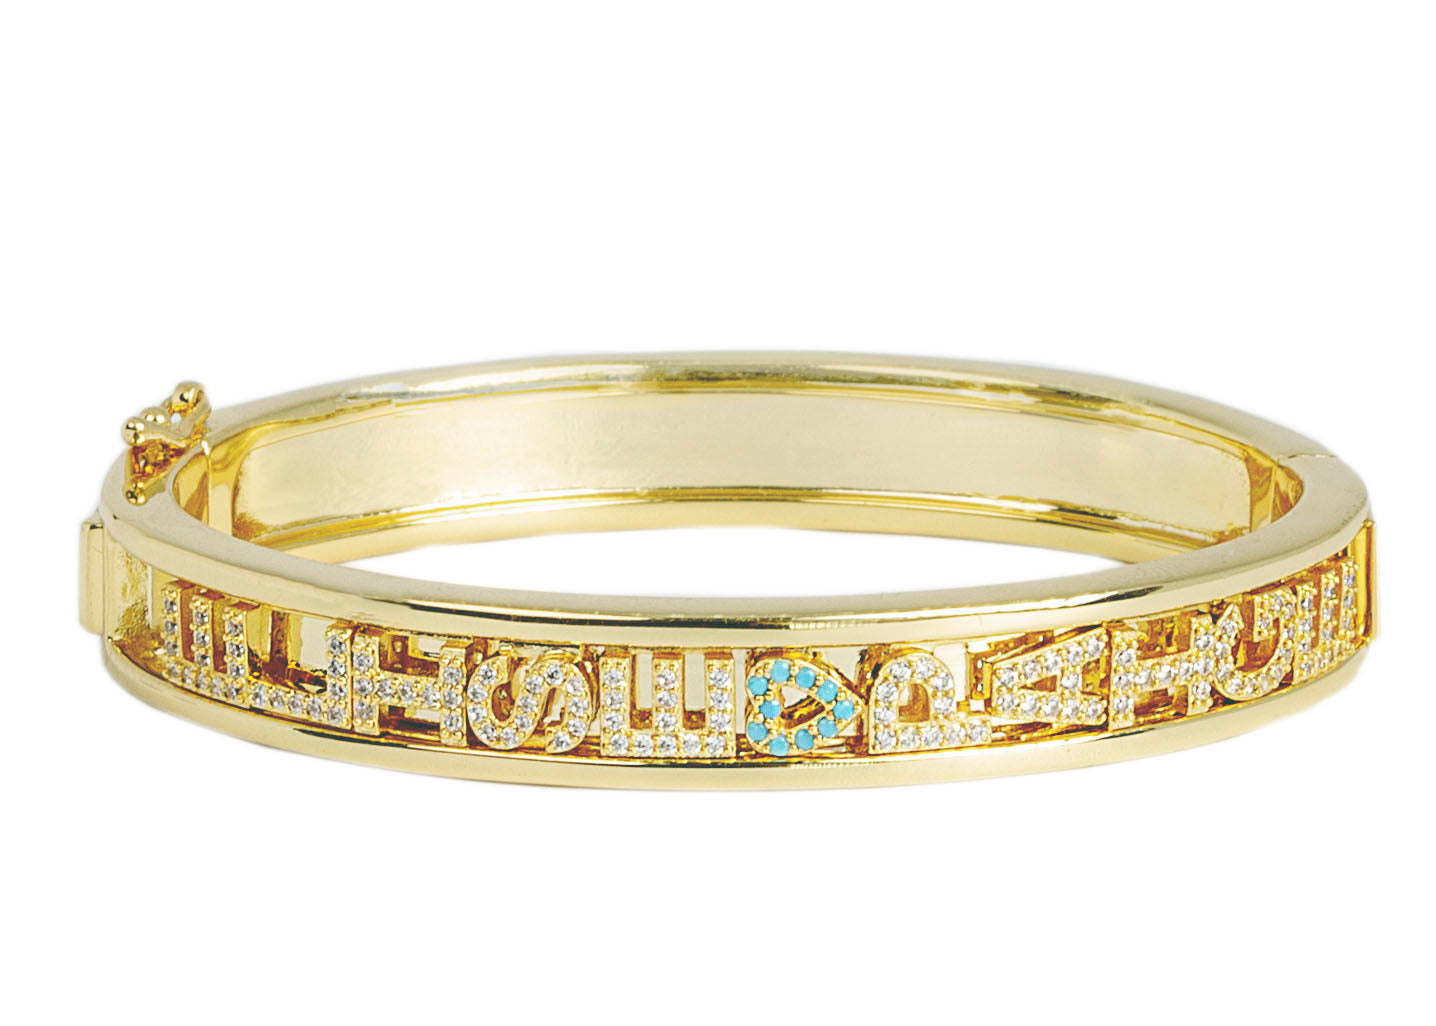 St John of God Eye Hook Bangle Bracelet - Gold-Filled Charm (9112GF)